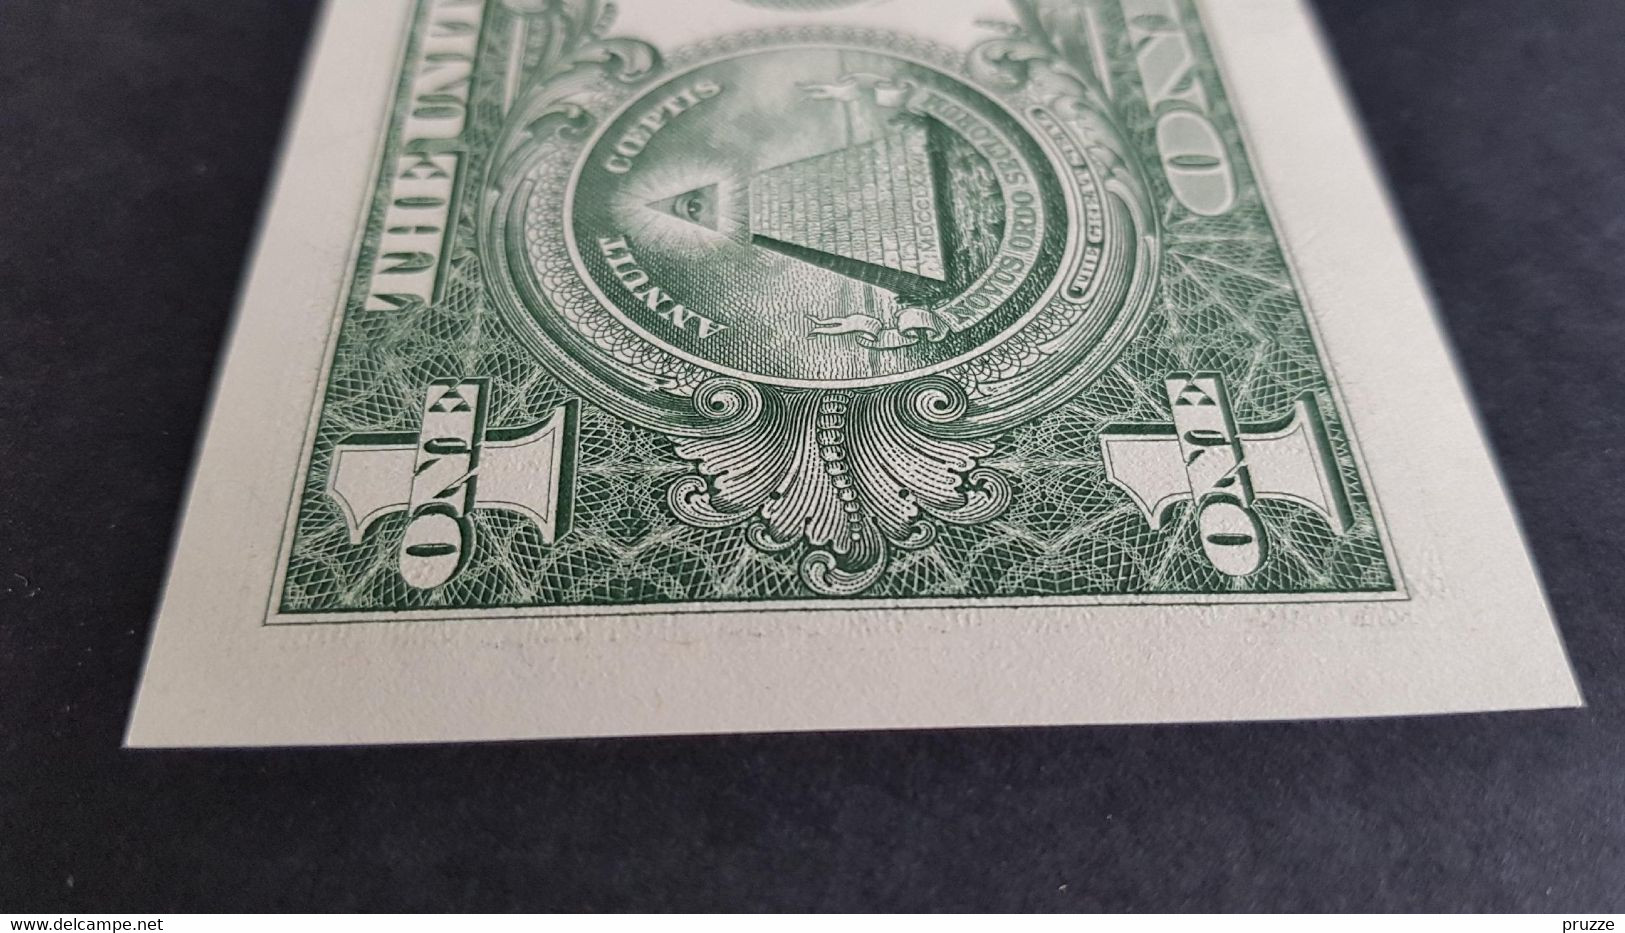 USA 2013, Federal Reserve Note, 1 $, One Dollar, B = New York, B13211745B, UNC